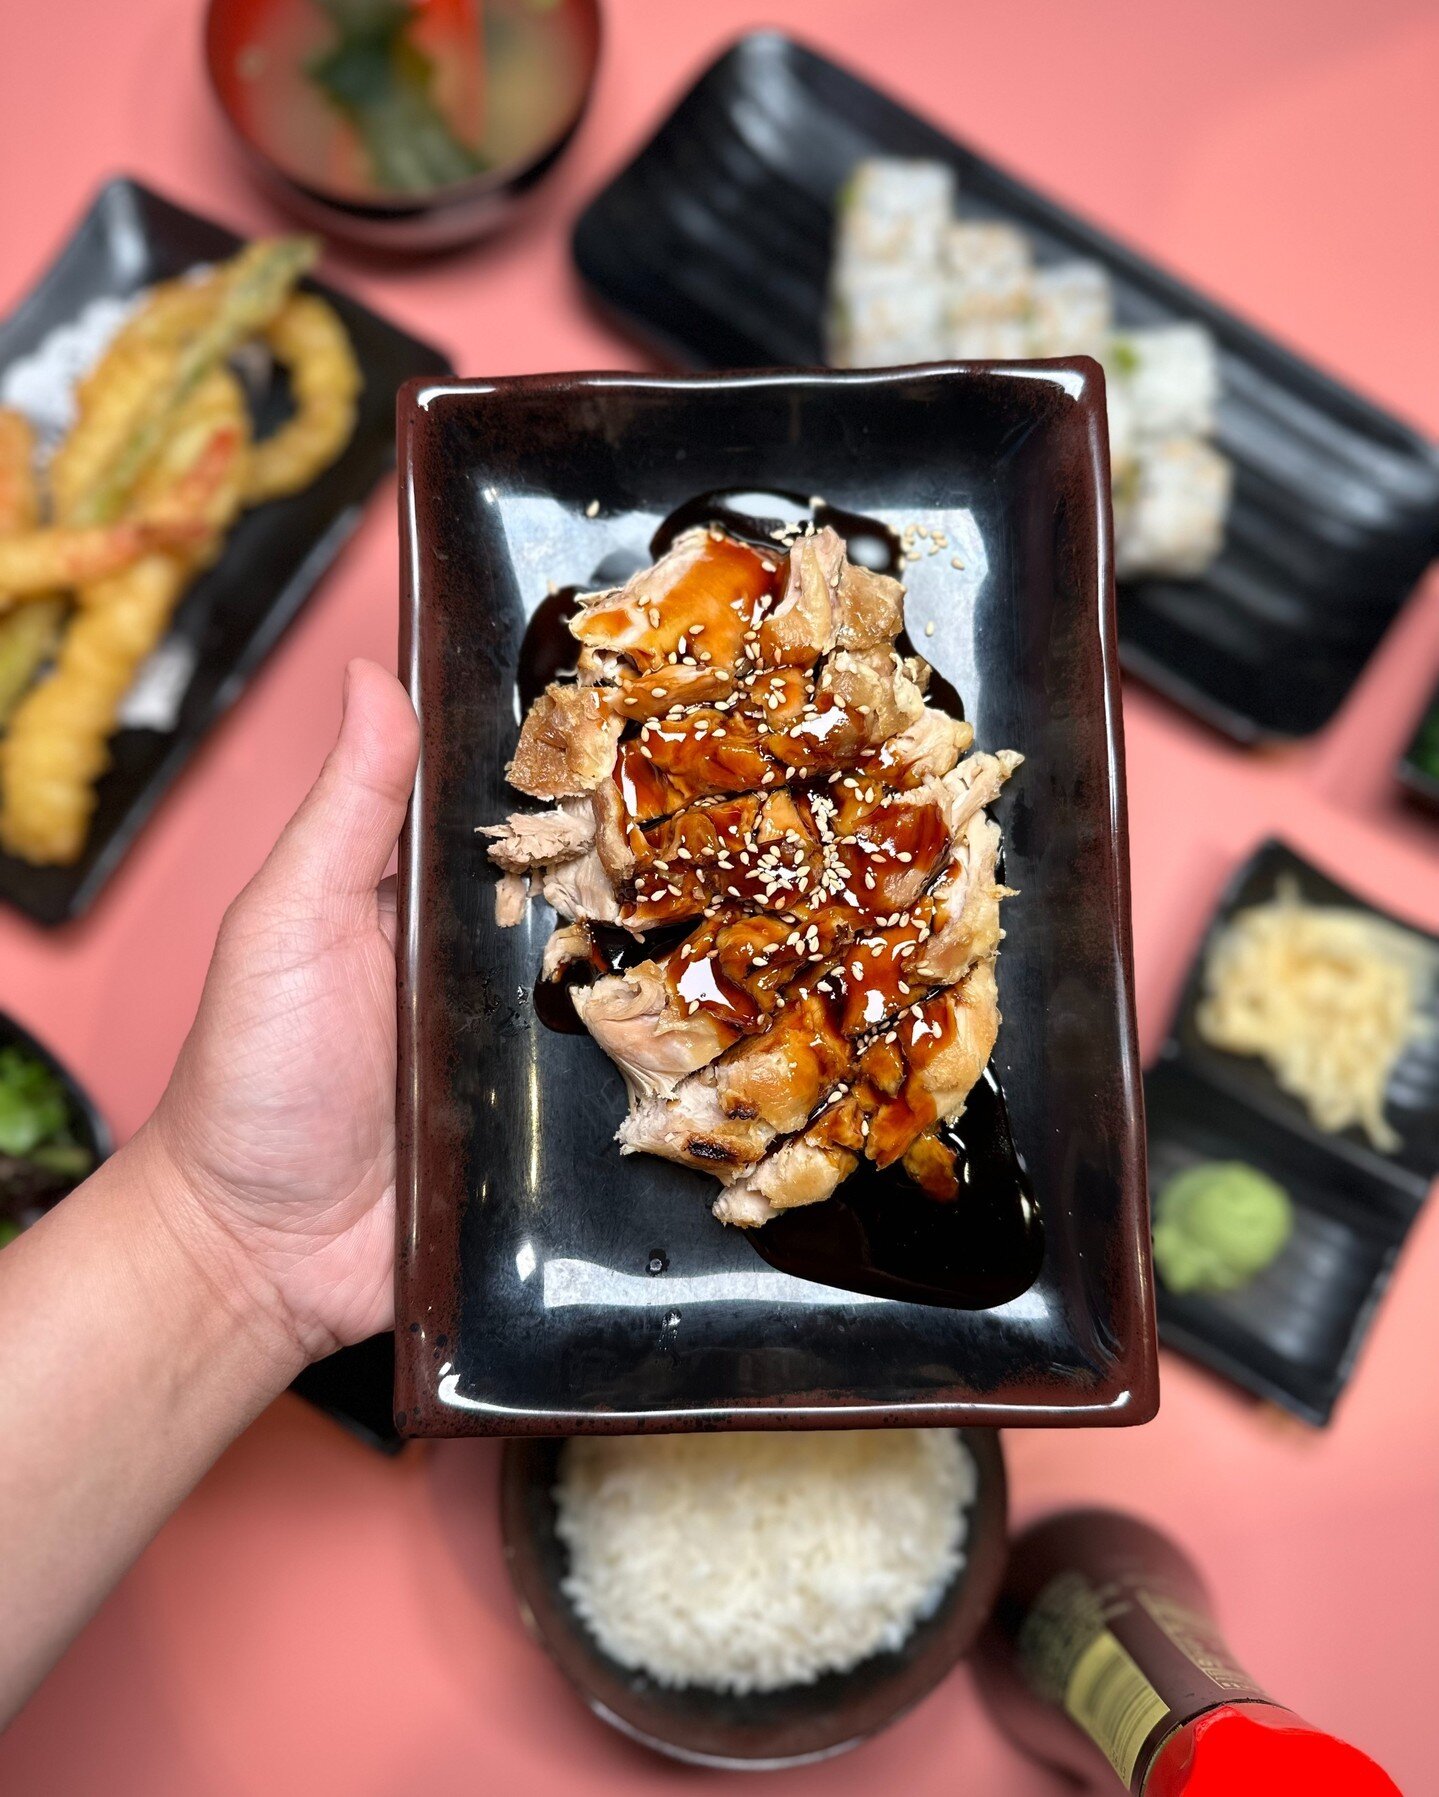 Capturing hearts, one incredible Japanese dish at a time! ITADAKIMASU! #UmamiJourney 🇯🇵❤️

◾️◽️◾️◽️◾️◽️◾️◽️◾️◽️ 
🍣 𝗔𝗬𝗖𝗘 𝗦𝗨𝗦𝗛𝗜 𝗛𝗢𝗨𝗦𝗘 𝗚𝗢𝗬𝗘𝗠𝗢𝗡 
⏰ ᴅᴀɪʟʏ: 12:00 ᴘᴍ - 11:00 ᴘᴍ 
⏰ ʟᴀꜱᴛ ꜱᴇᴀᴛɪɴɢ ꜰᴏʀ ᴀʏᴄᴇ 10ᴘᴍ 
⏰ ʟᴀꜱᴛ ᴏʀᴅᴇʀ 10:30ᴘᴍ 
📍 